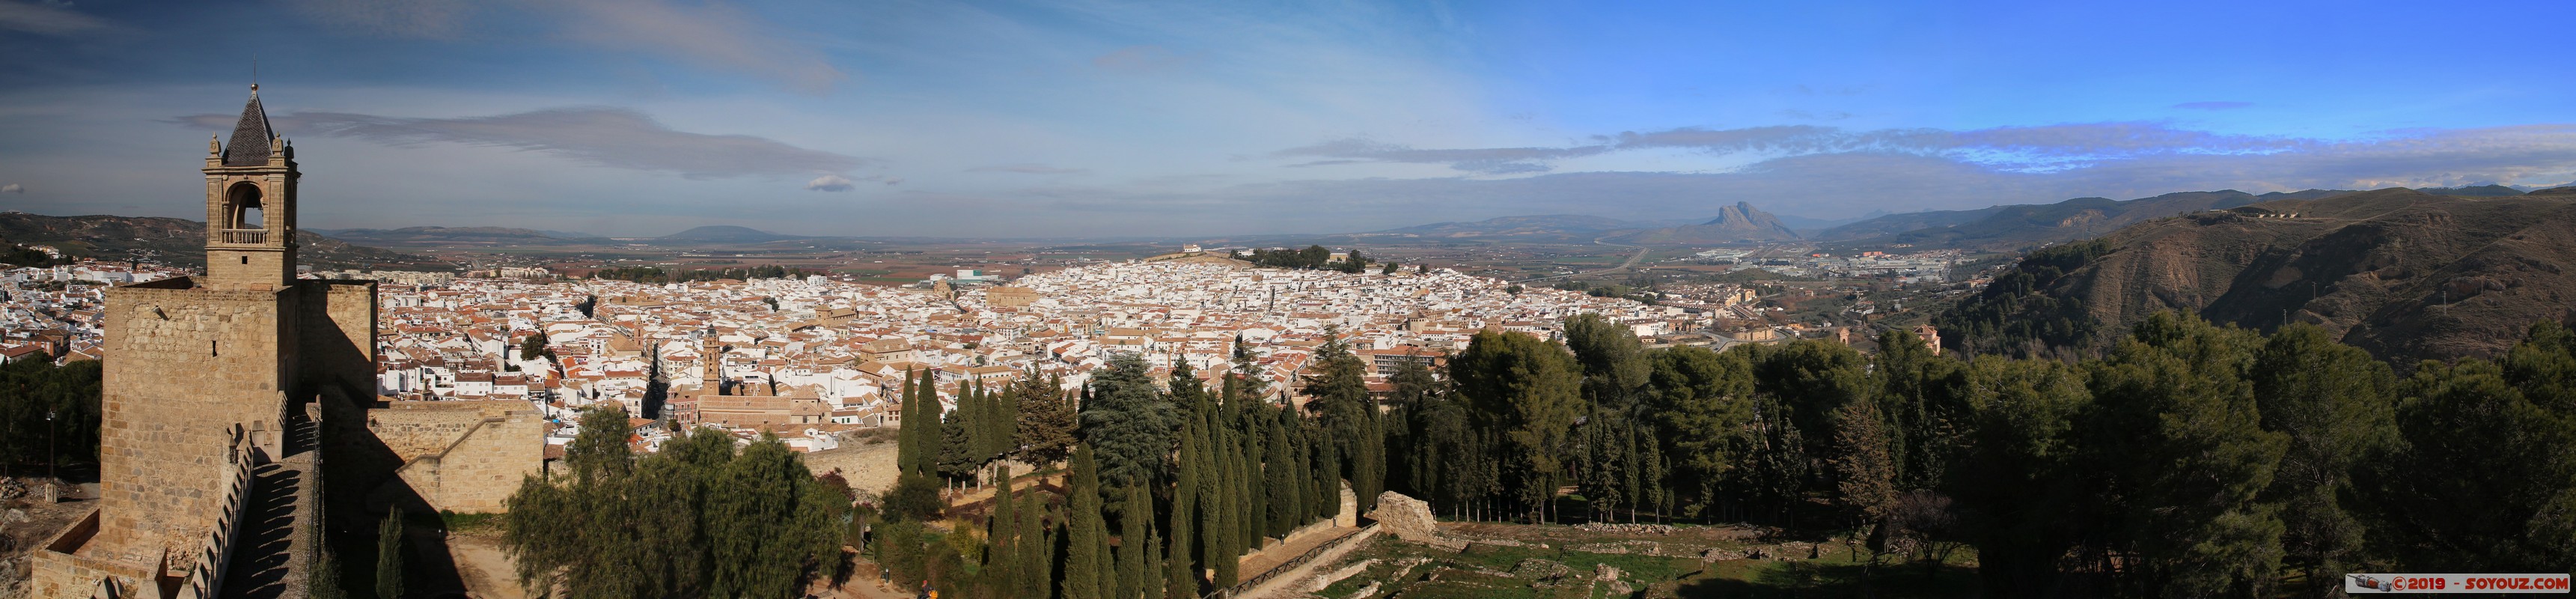 Antequera - Panorama de la ciudad desde Alcazaba
Mots-clés: Andalucia Antequera ESP Espagne Alcazaba panorama